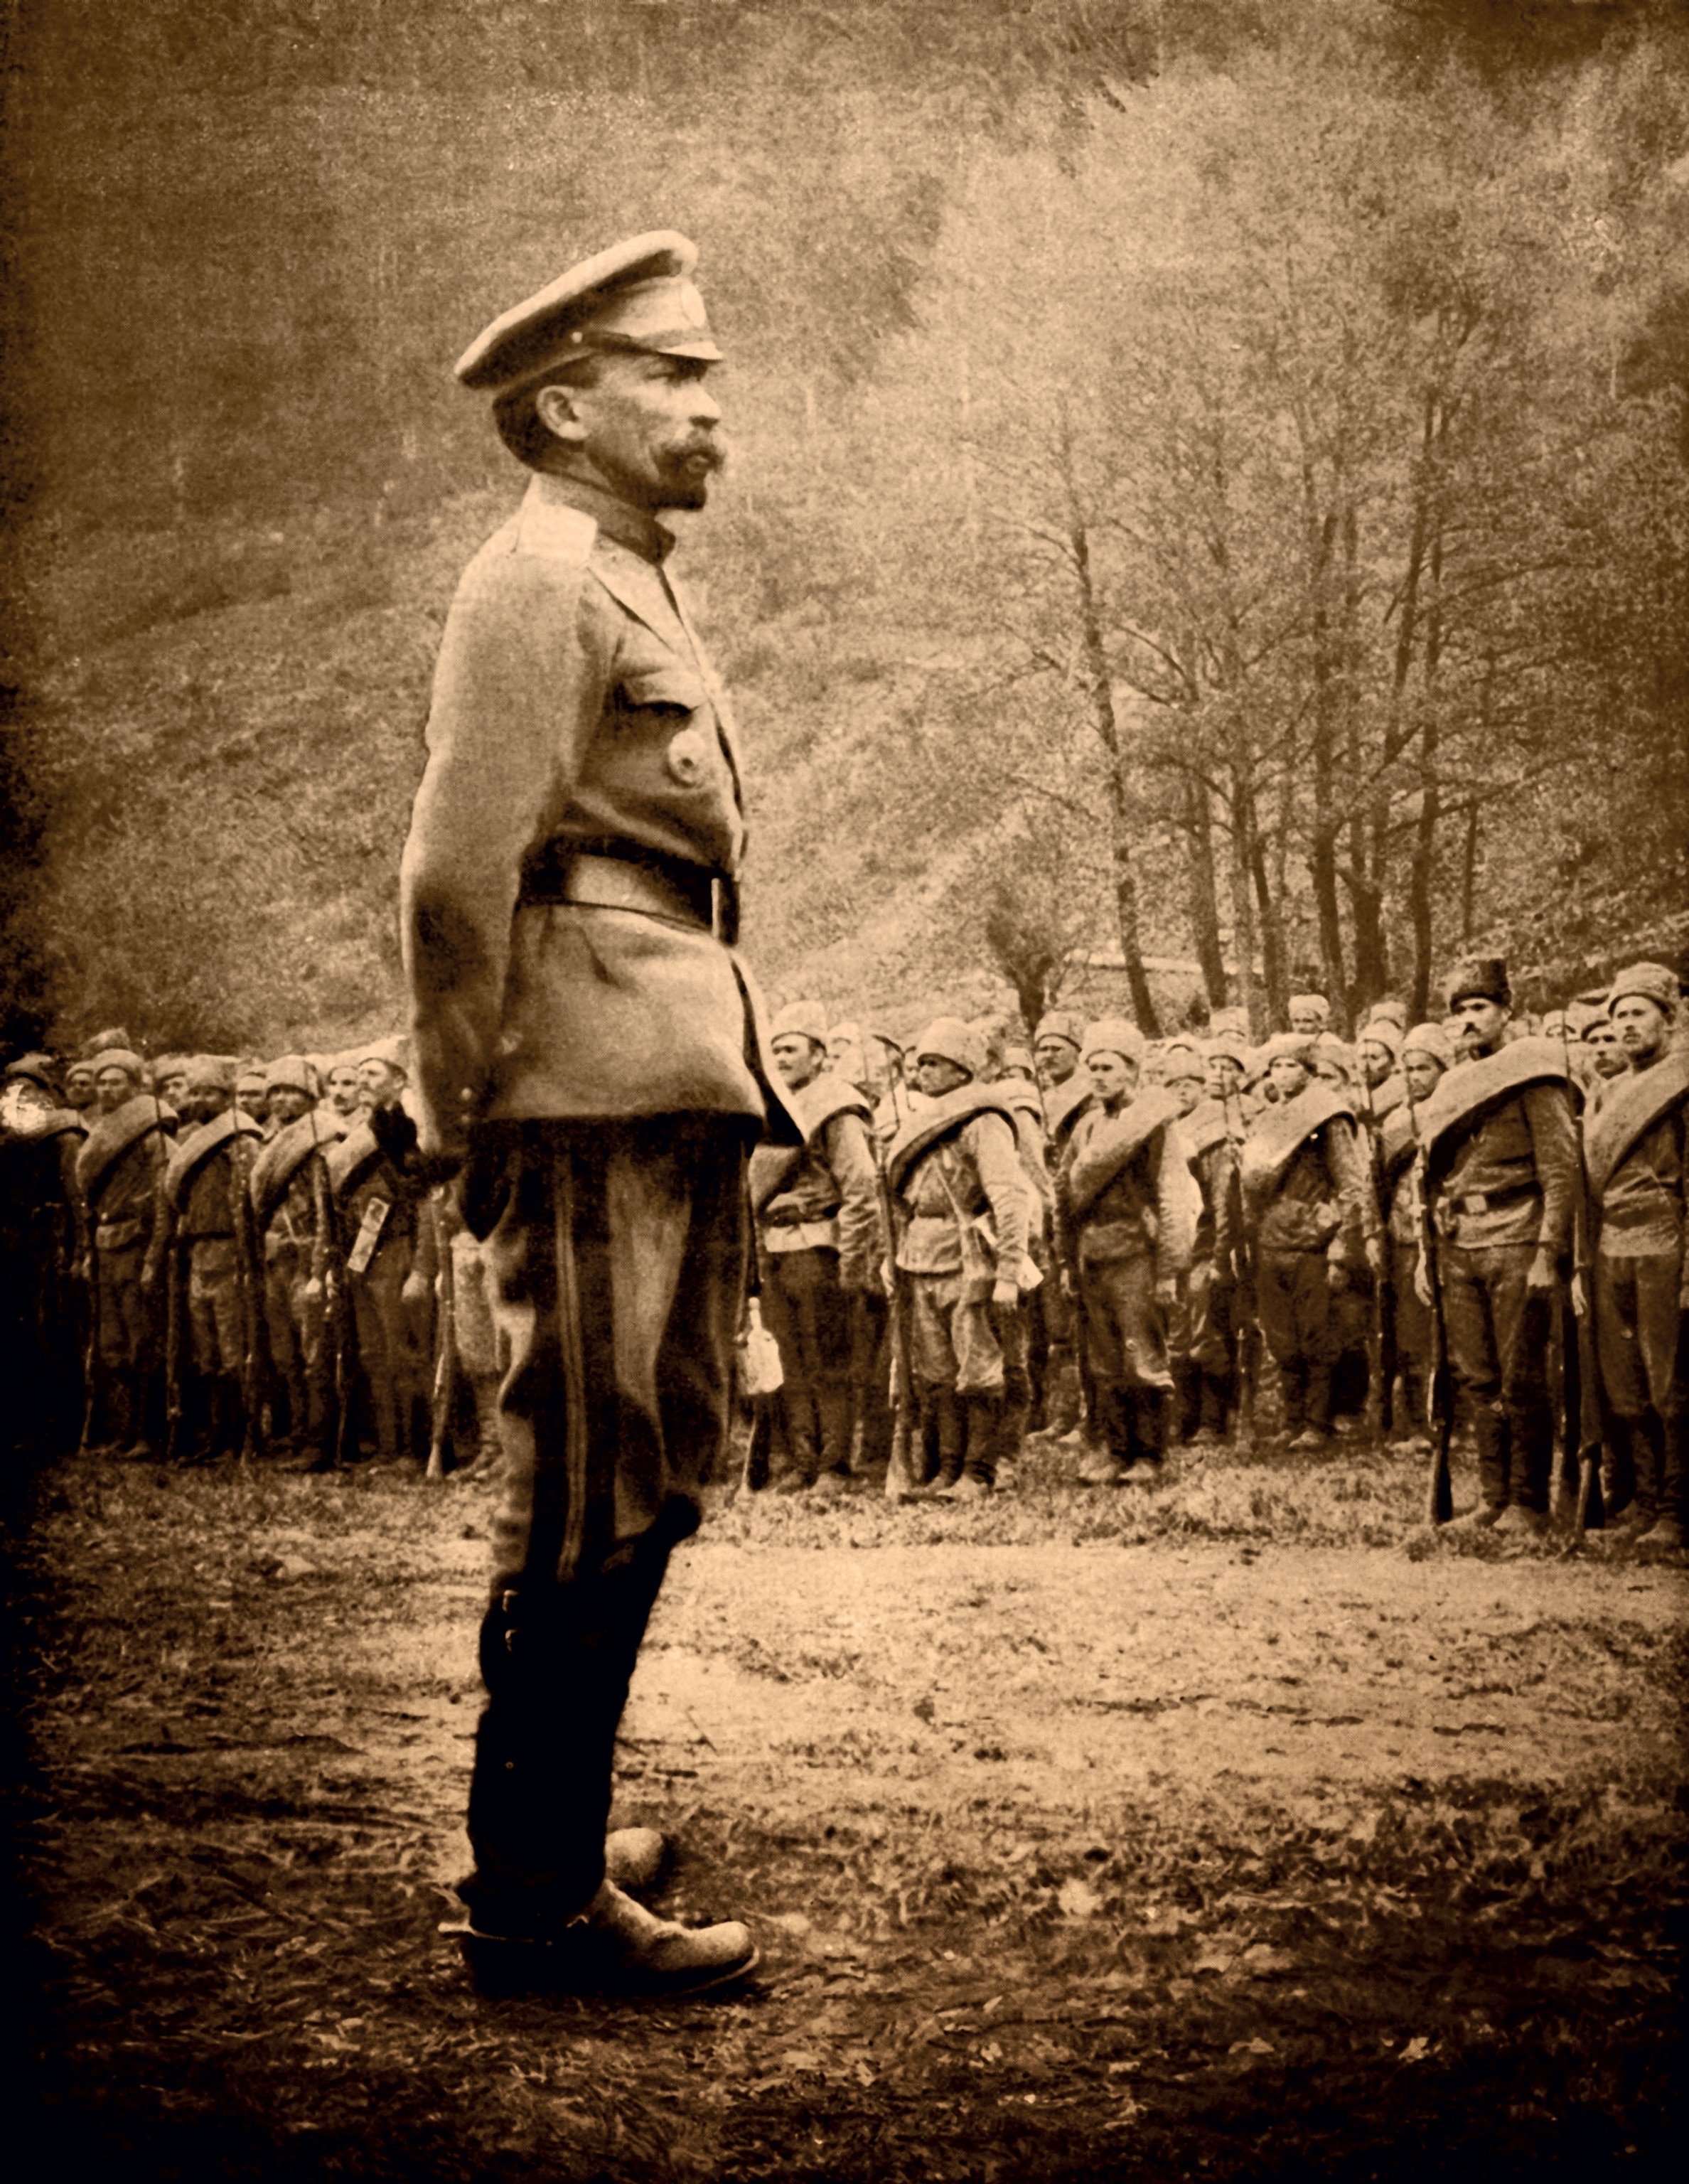 General Kornilov standing